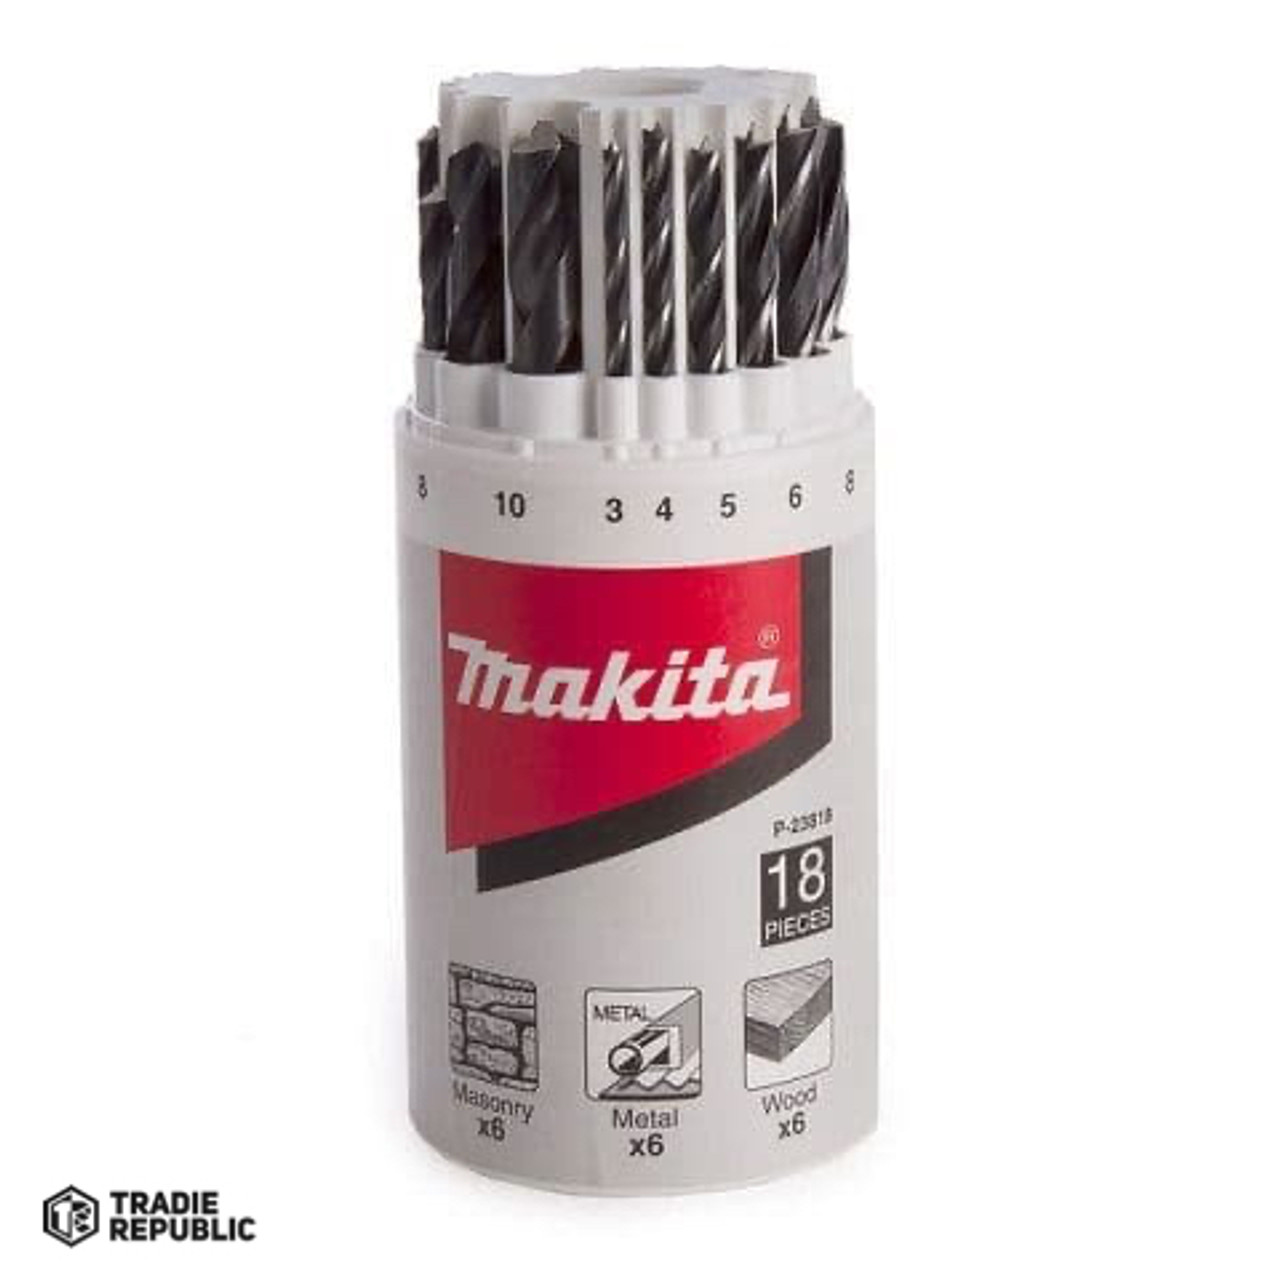 P-23818 Makita 18PC Mixed Drill Bit Set